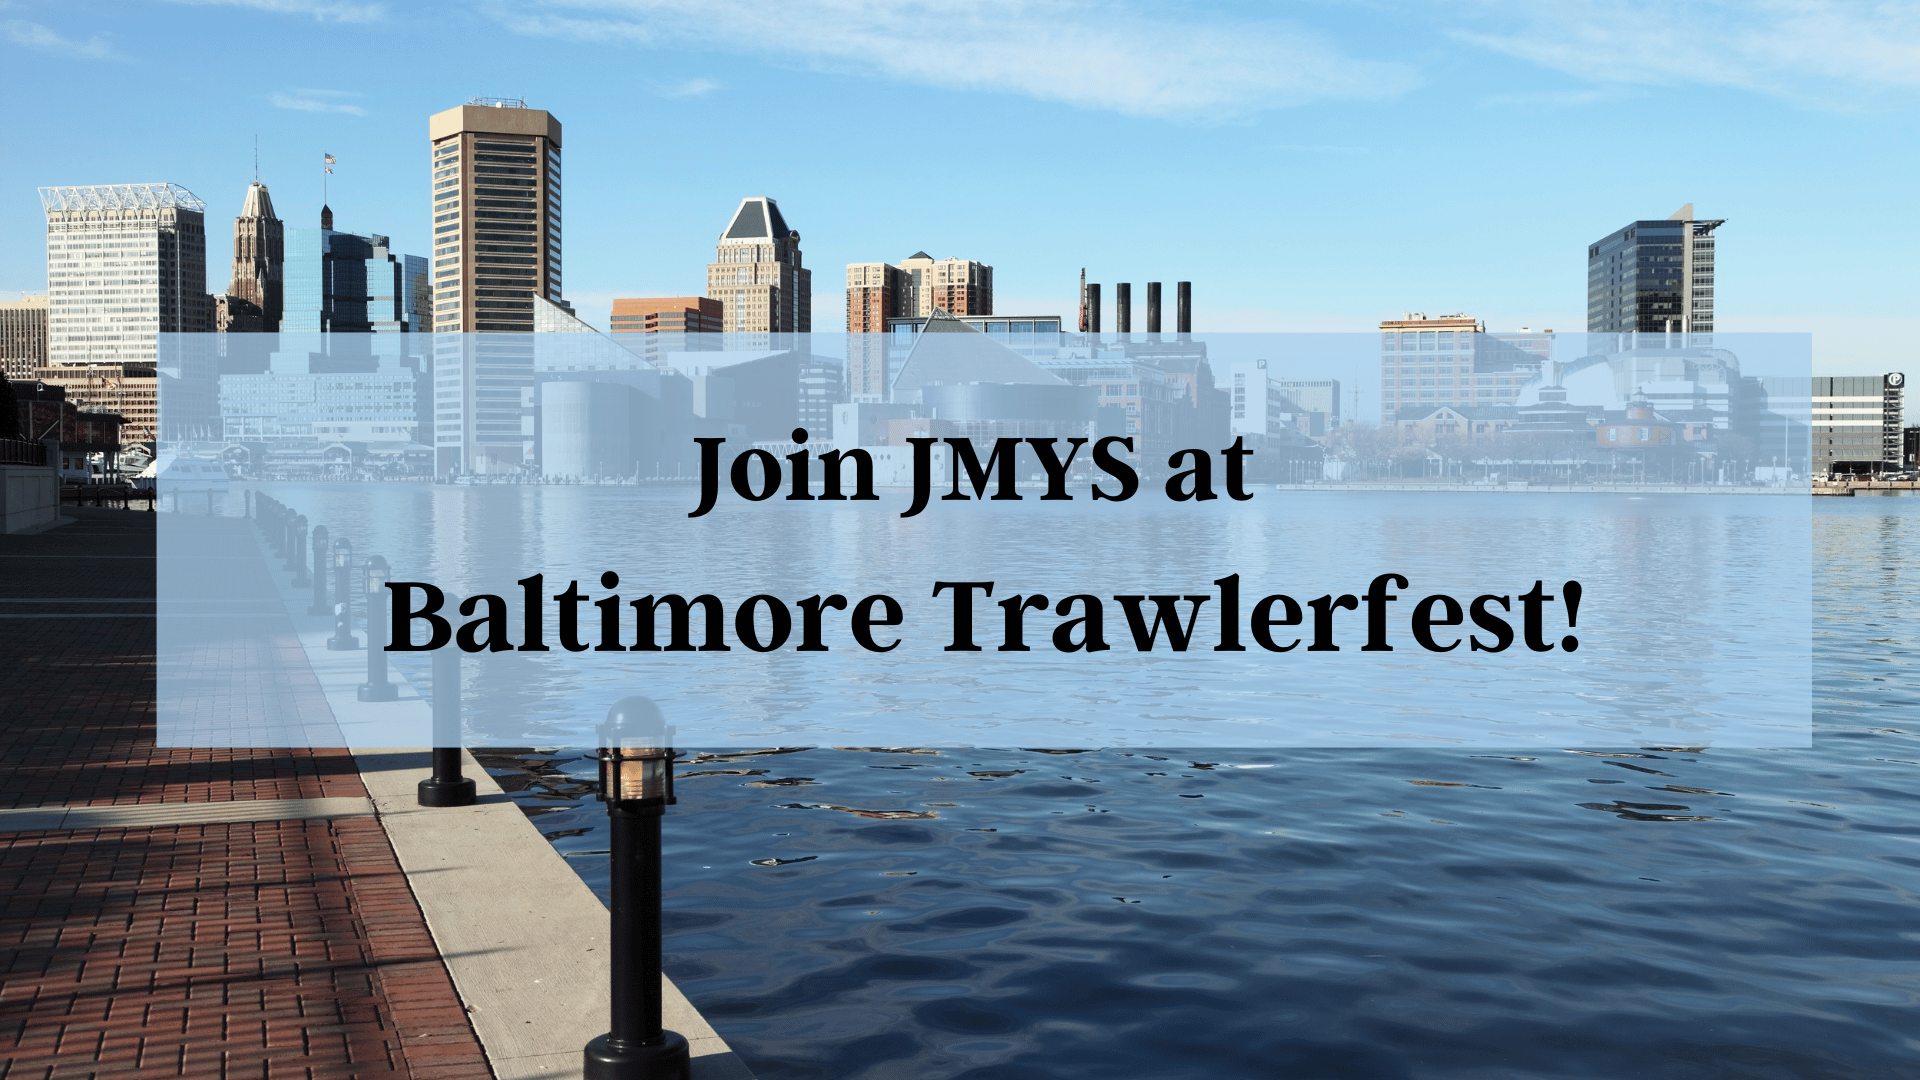 Baltimore Trawlerfest